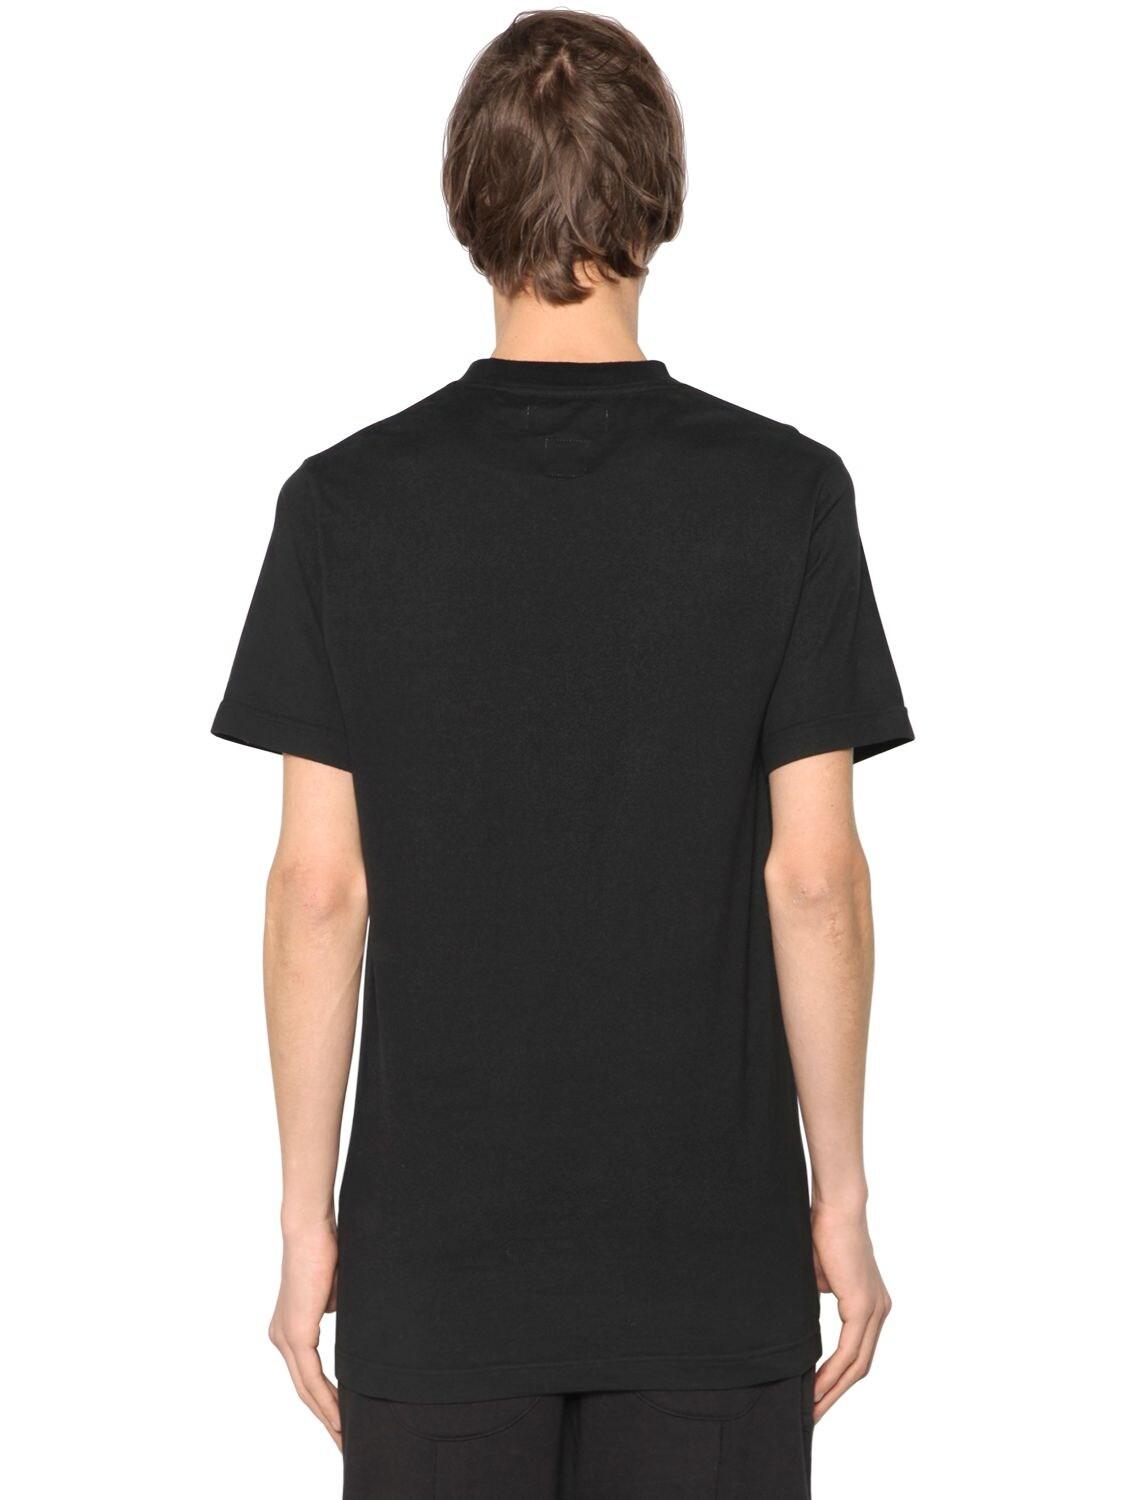 Facetasm Logo Embroidered Cotton Jersey T-shirt in Black for Men - Lyst